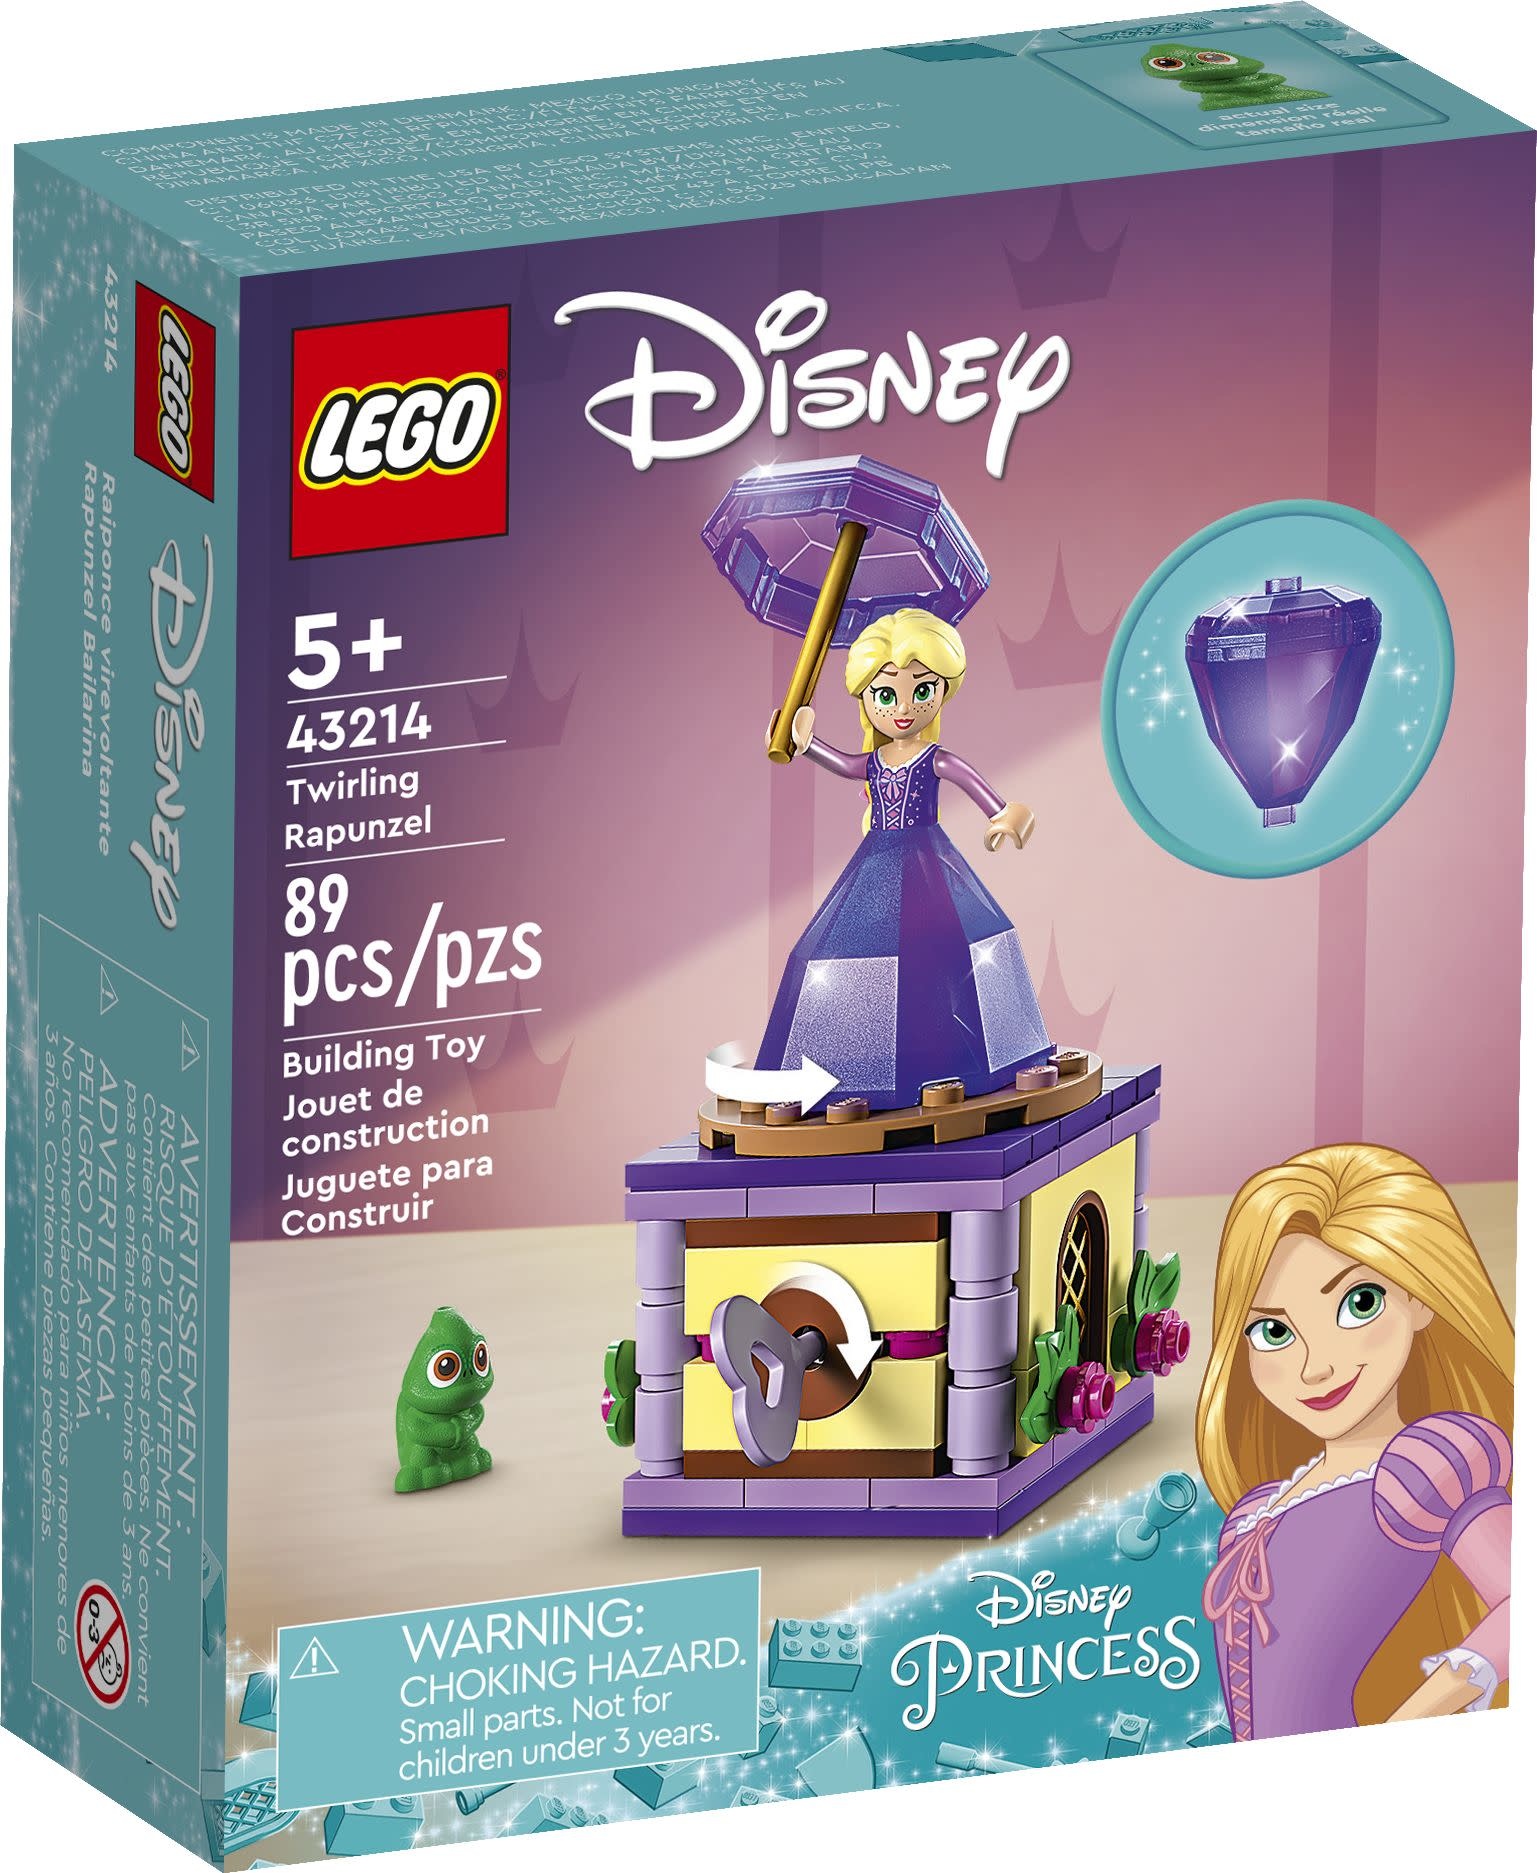 Lego Lego 43214 Disney - Raiponce virevoltante